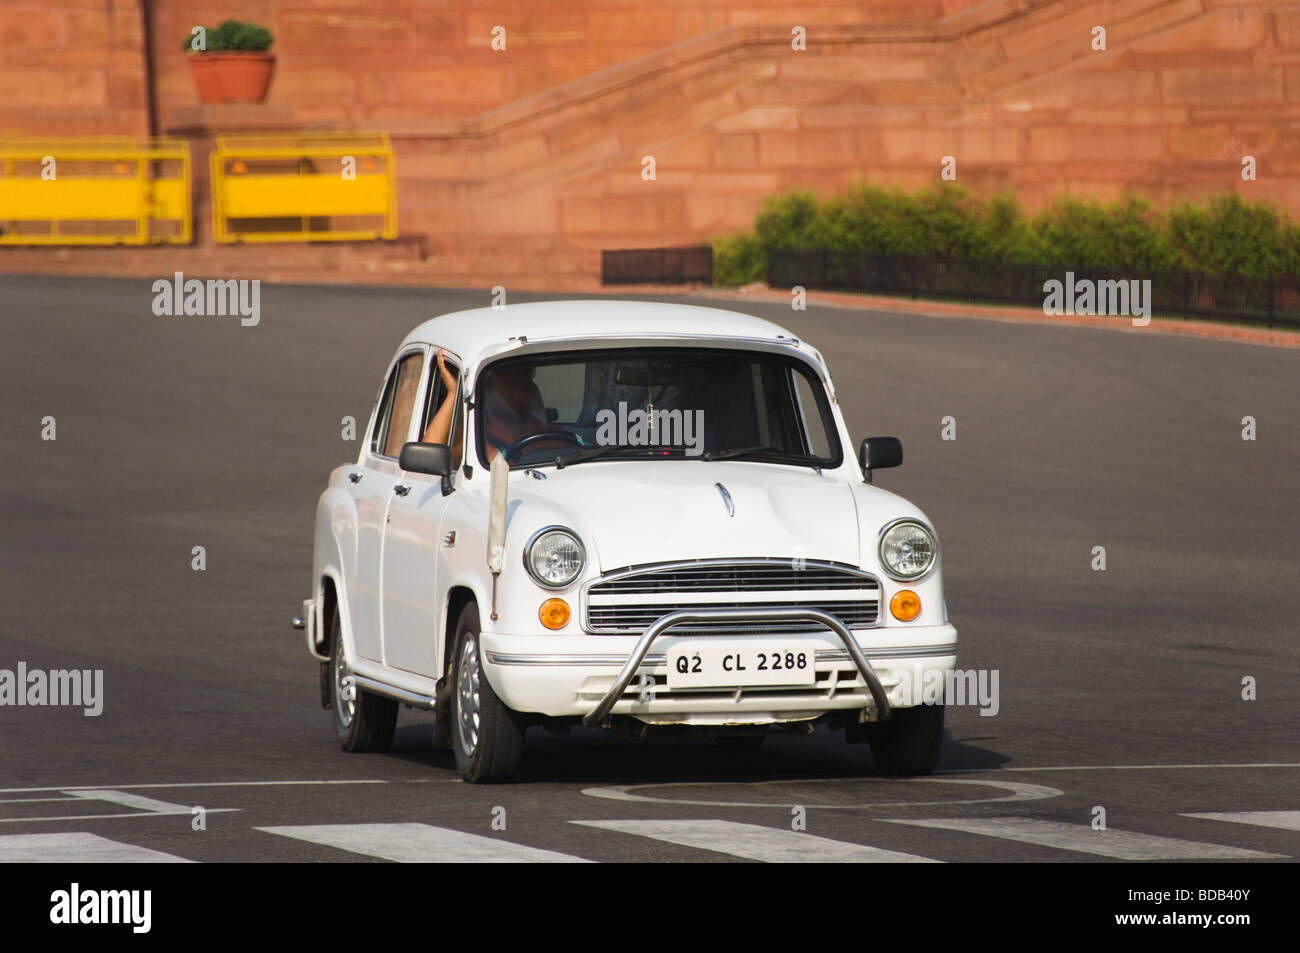 Ambassador car moving on the road, New Delhi, India Stock Photo